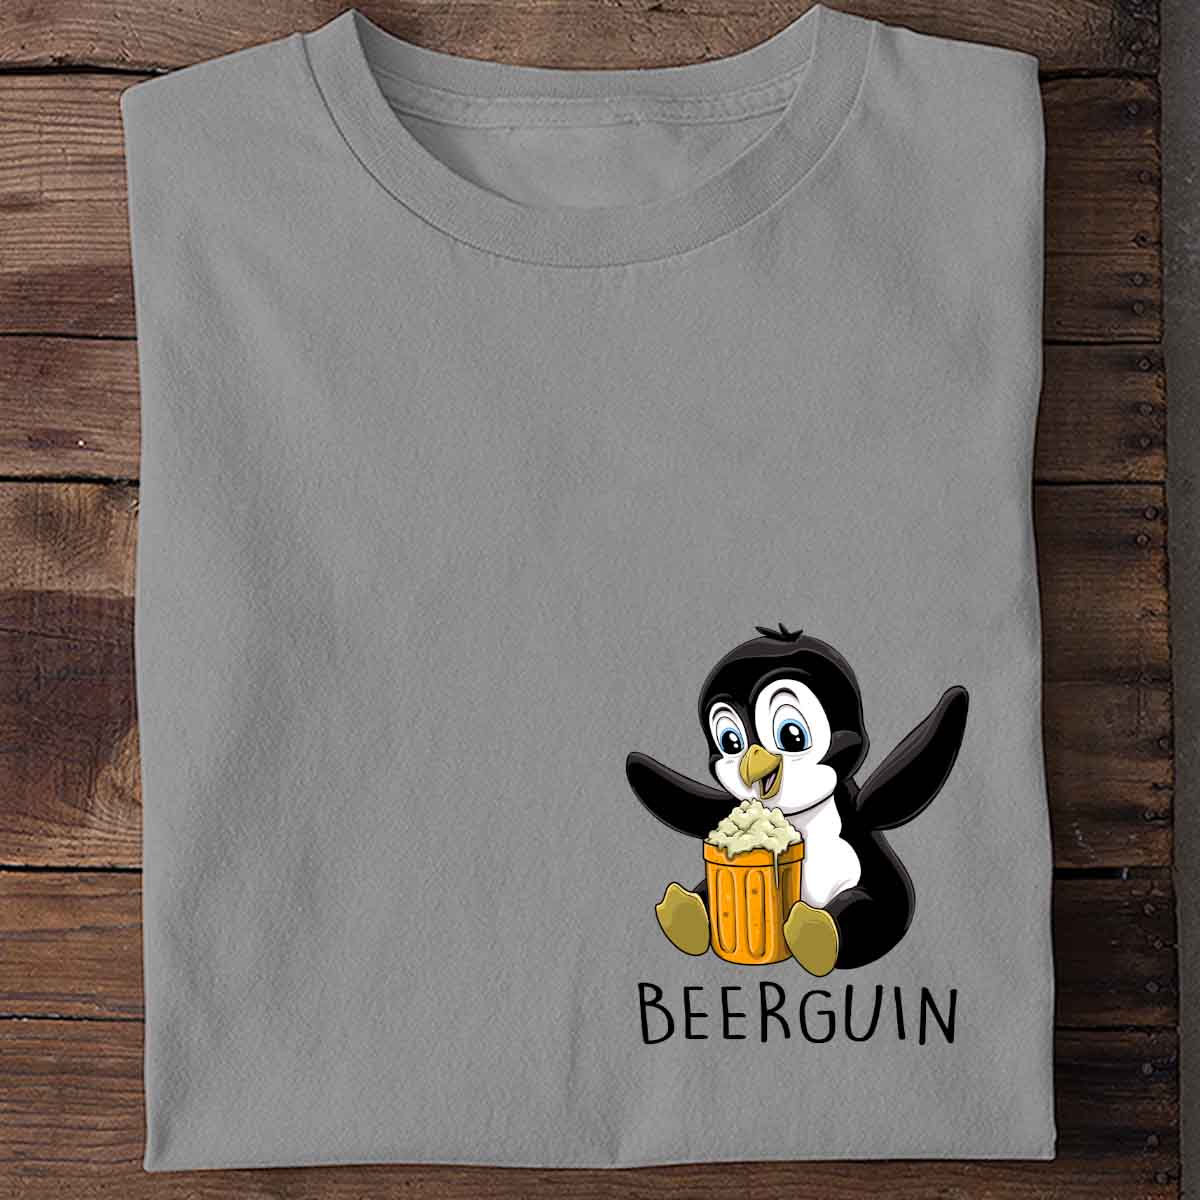 Beerguin - Shirt Unisex Chest